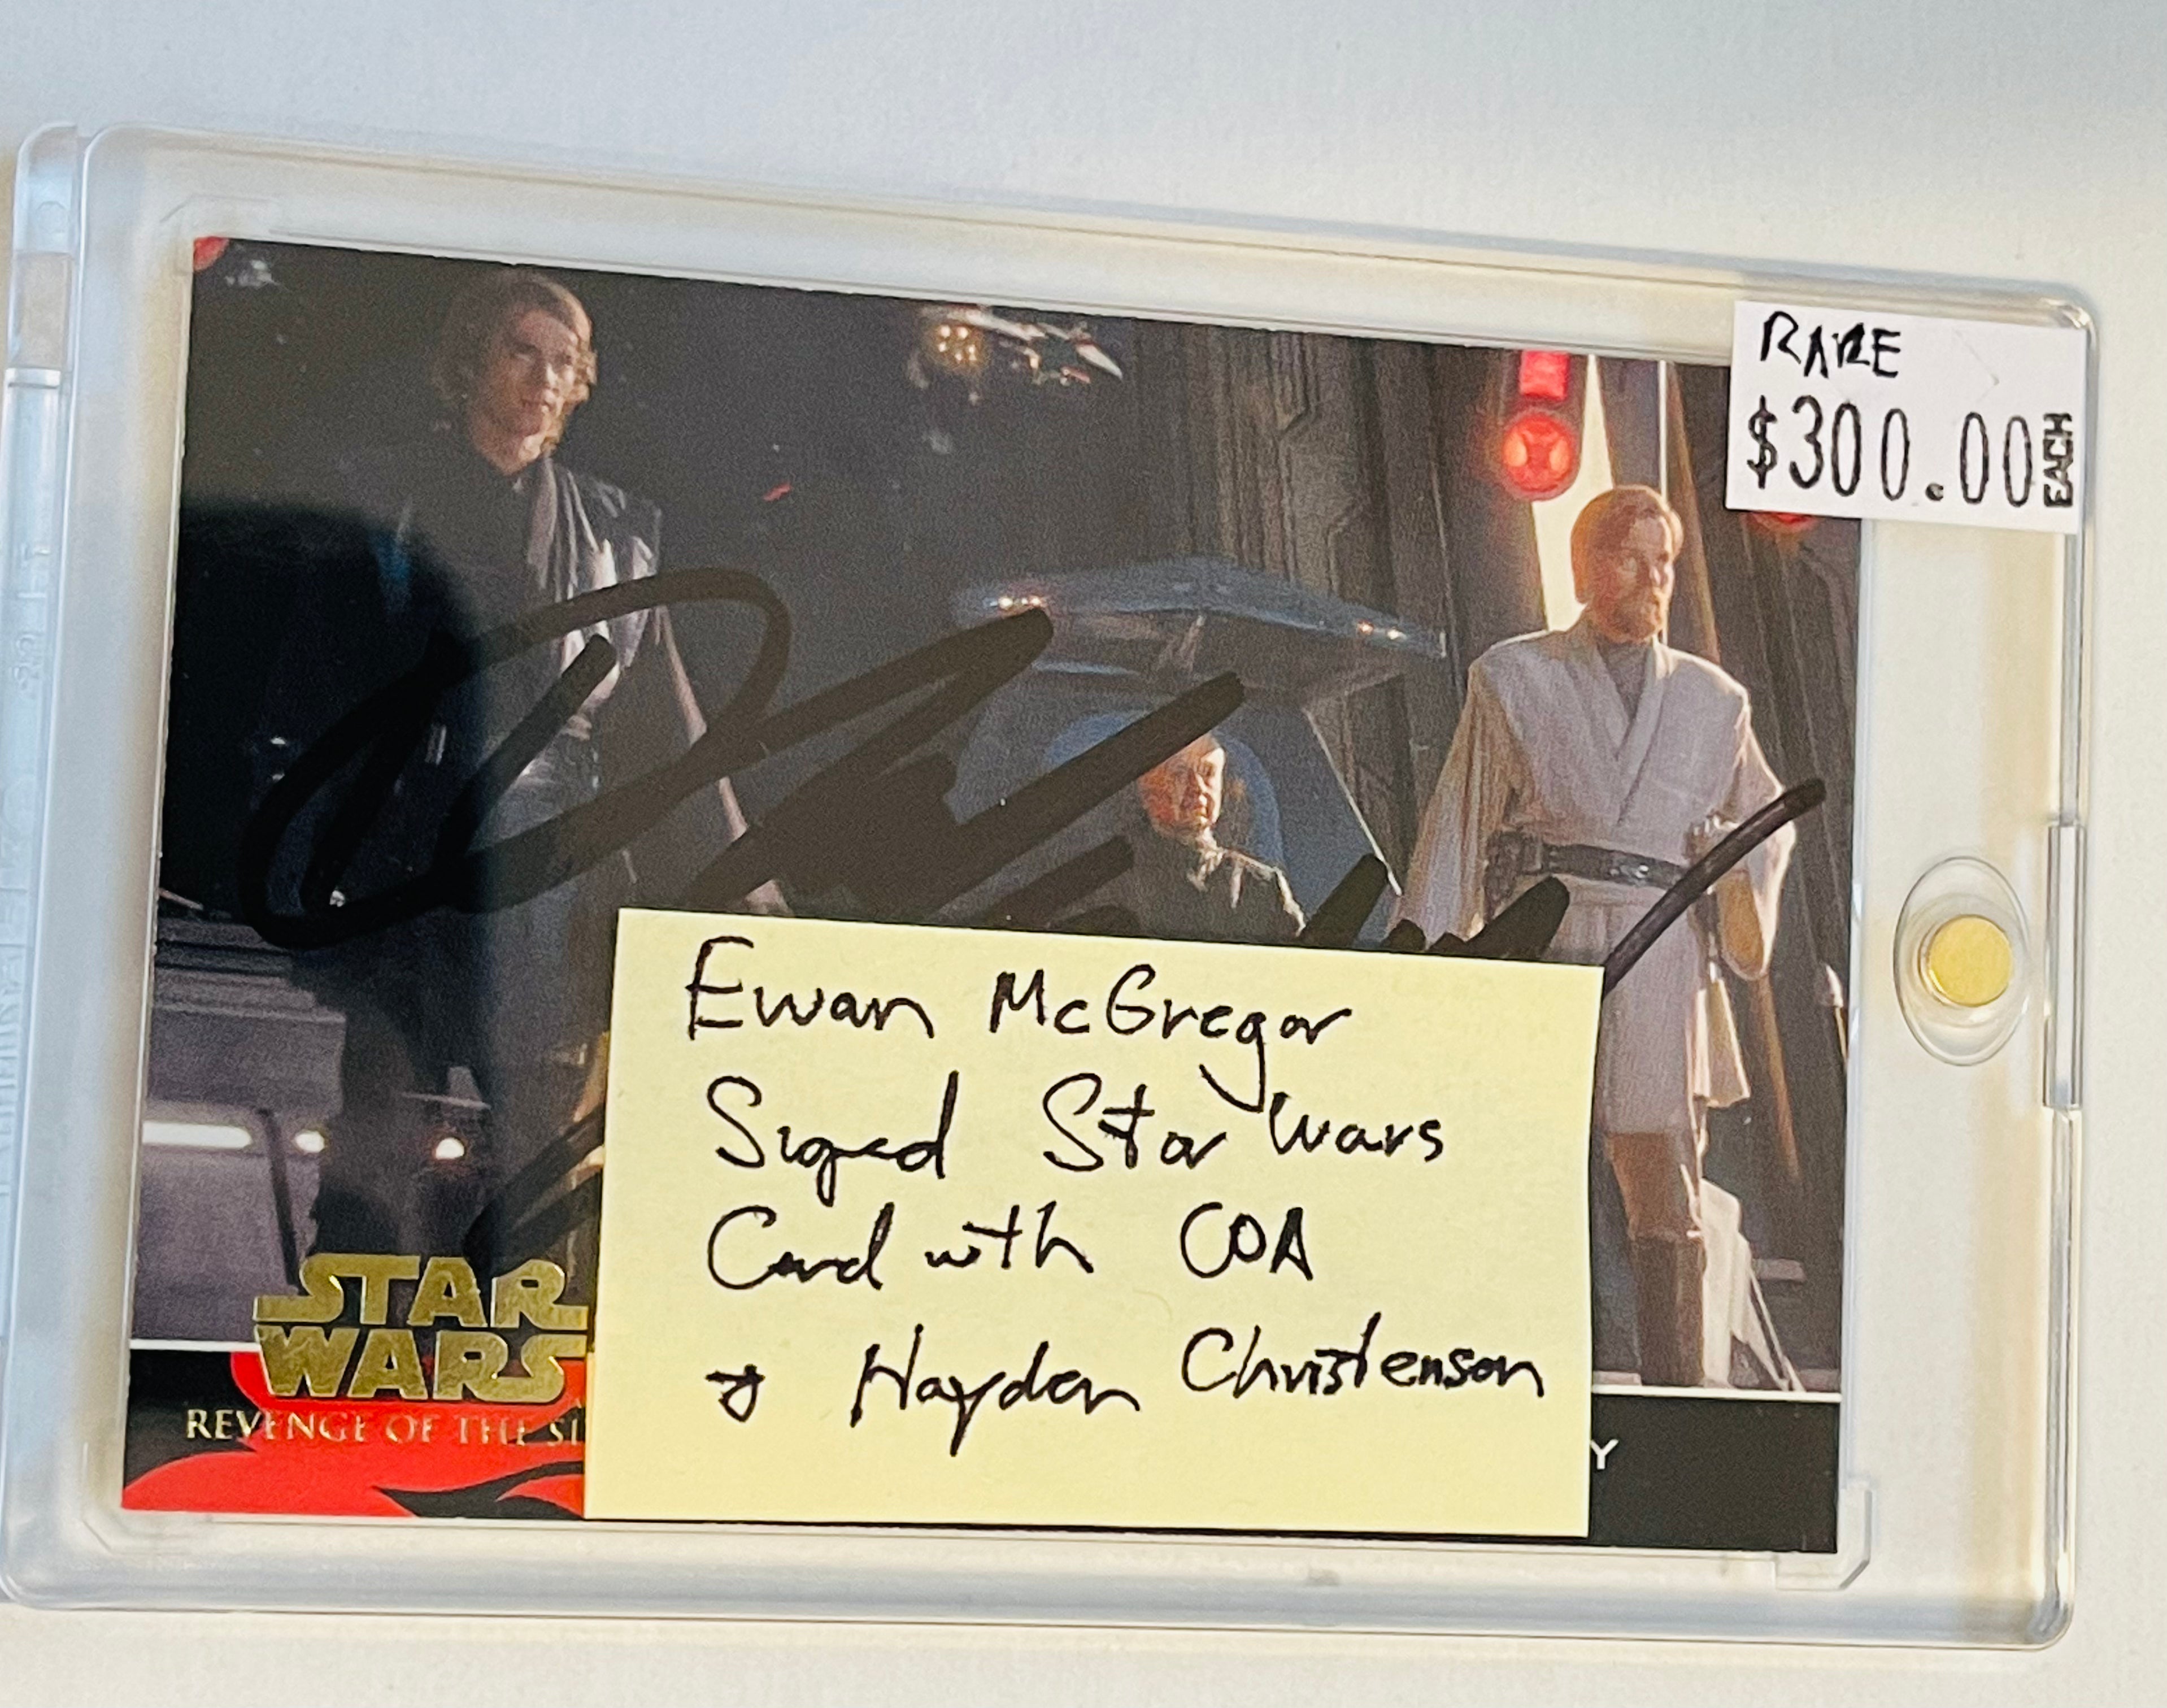 Star Wars Ewan McGregor and Hayden Christensen rare double autograph card with COA